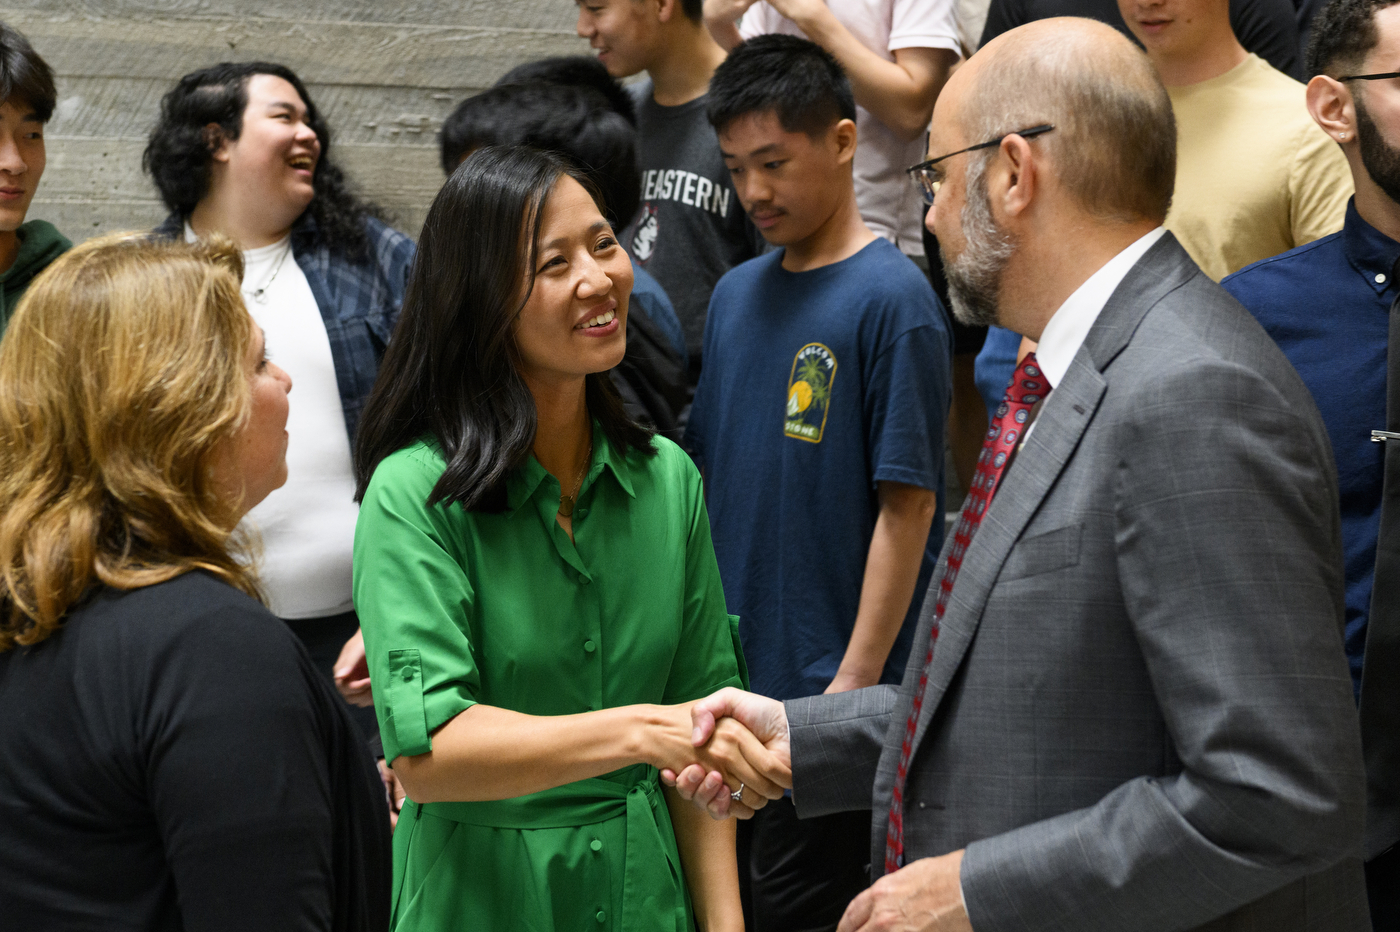 Mayor Michelle Wu shaking someone's hand